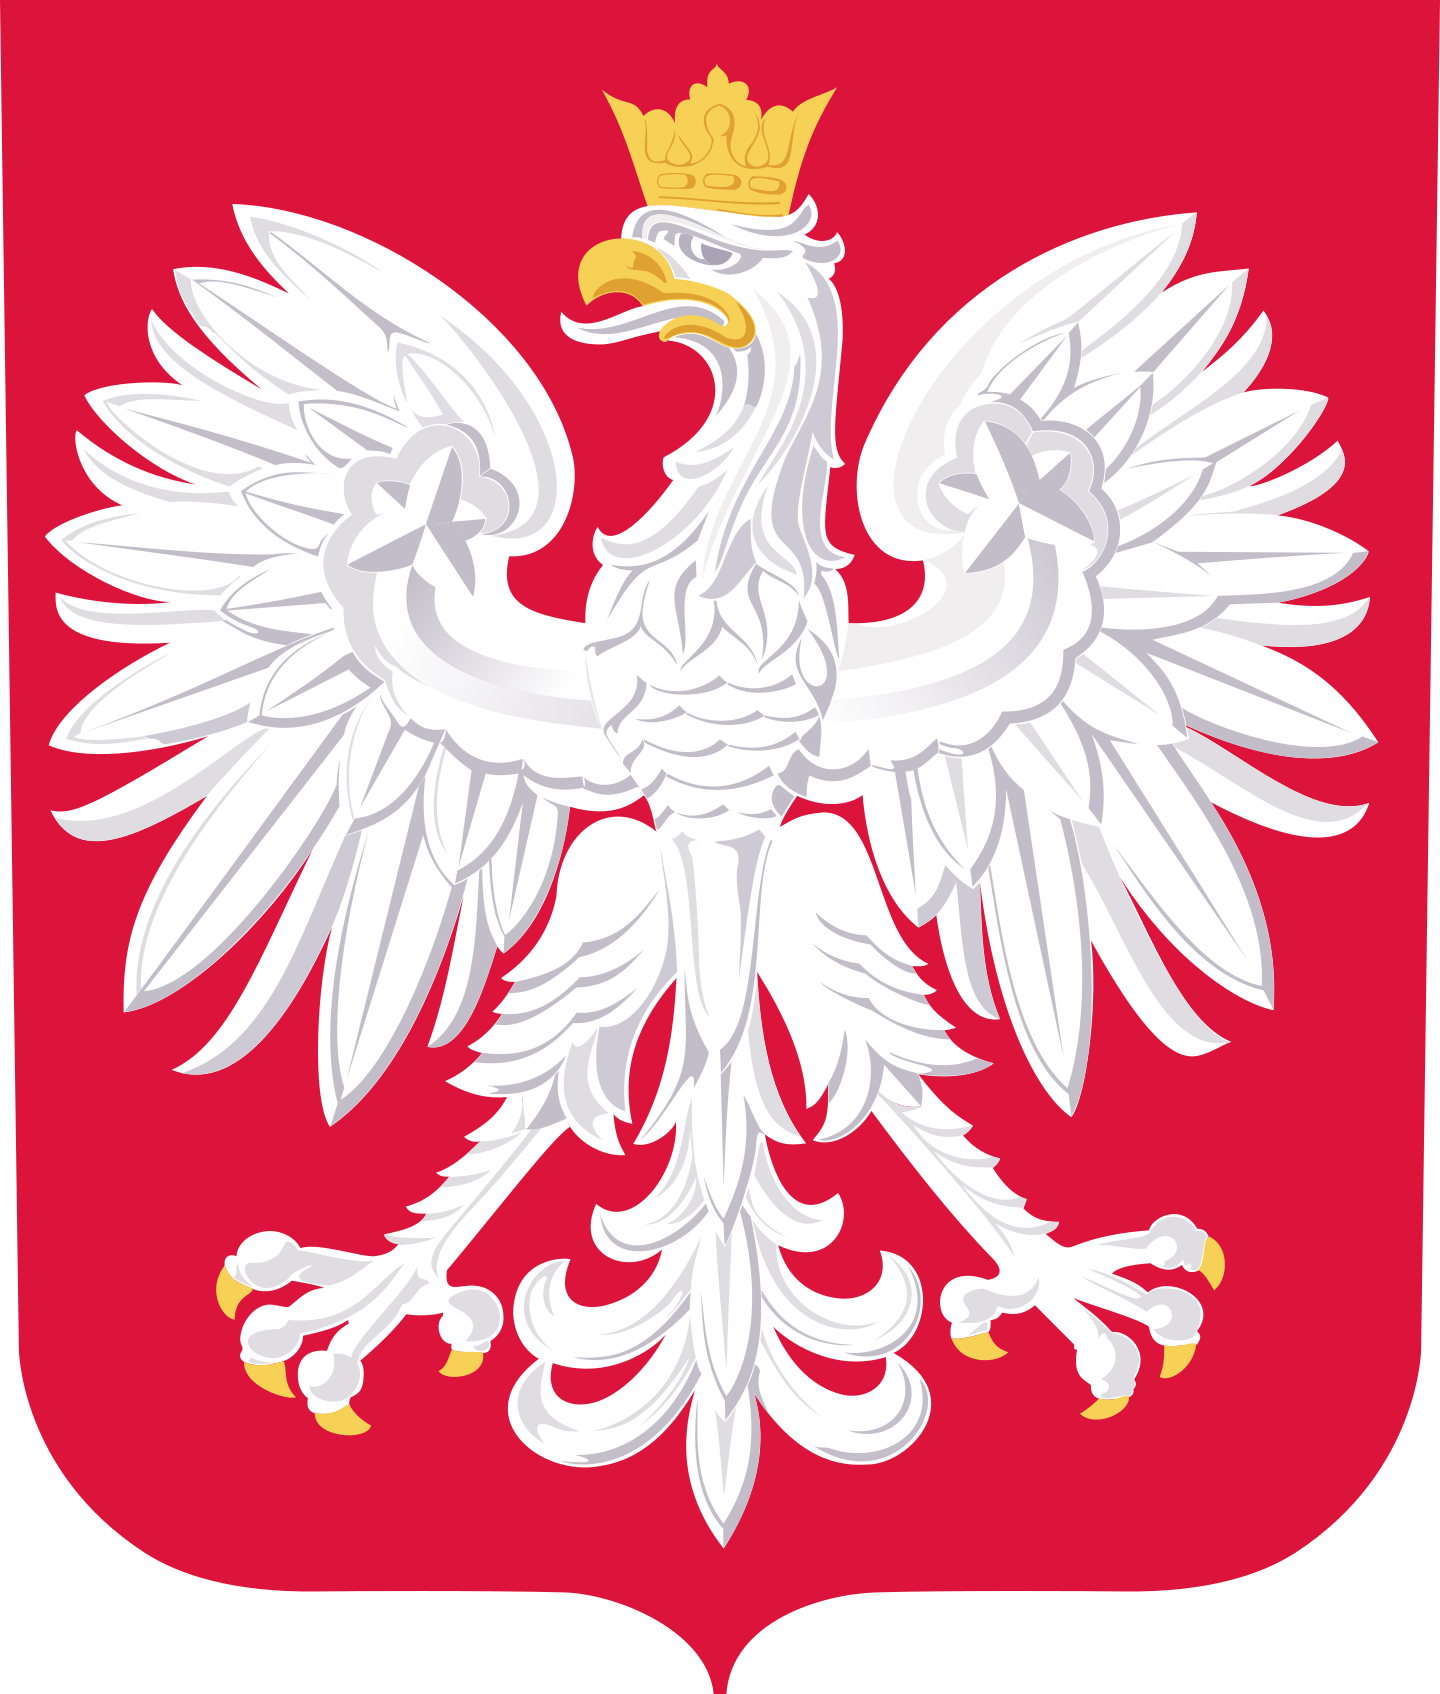 poland national football team logo 2 - Poland National Football Team Logo